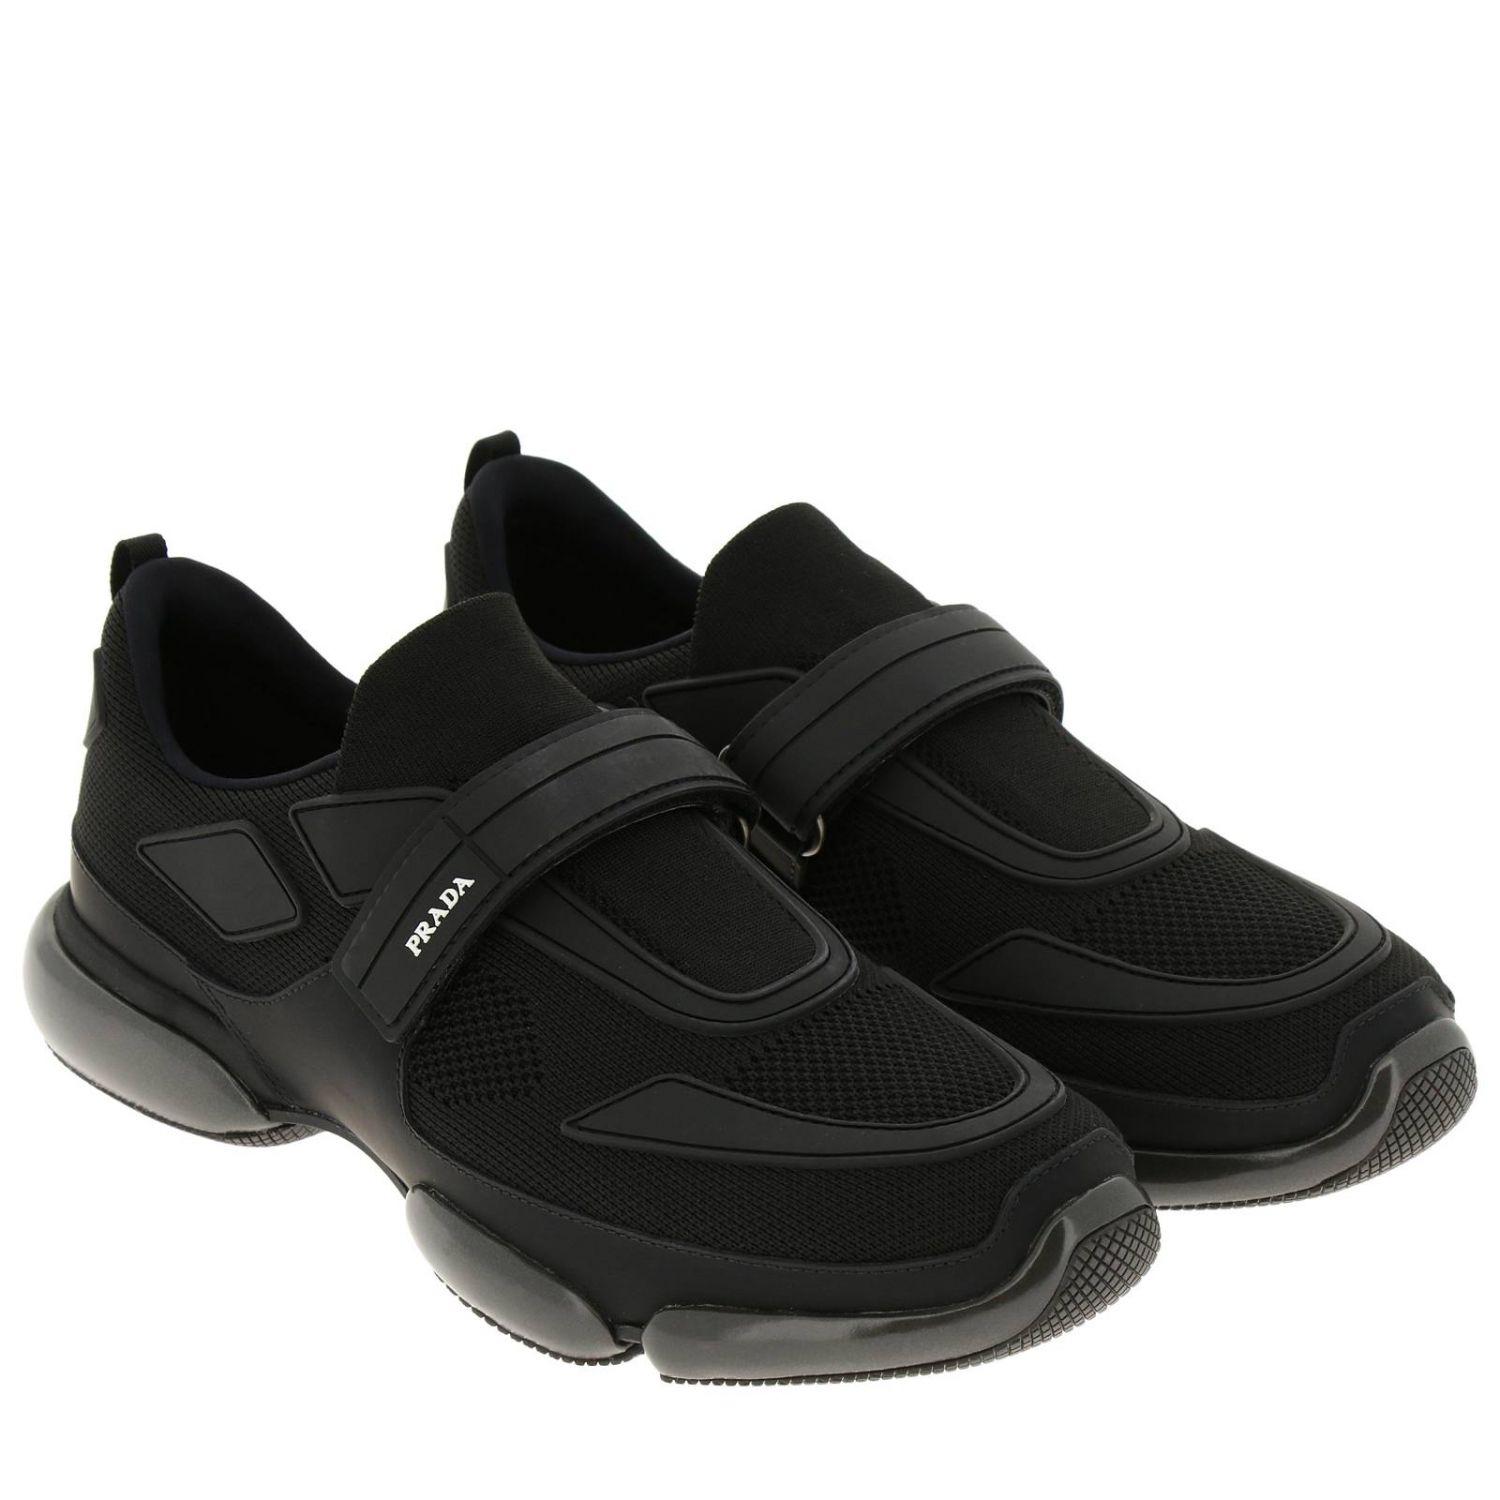 Prada Leather Sneakers Shoes Men in Black for Men - Lyst